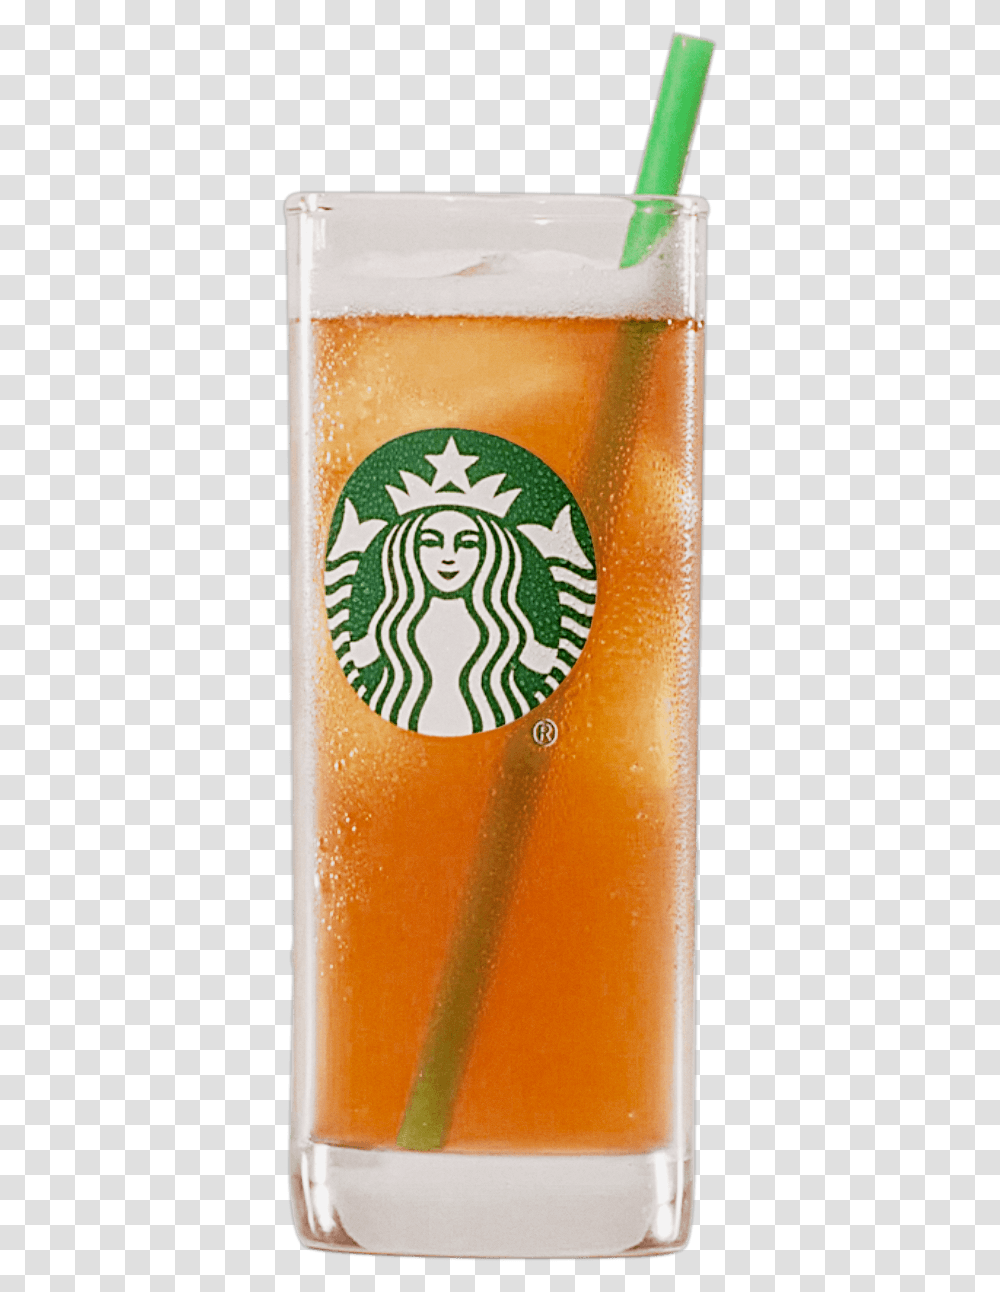 Starbucks Vector Drink Starbucks New Logo 2011, Beverage, Beer, Alcohol, Juice Transparent Png